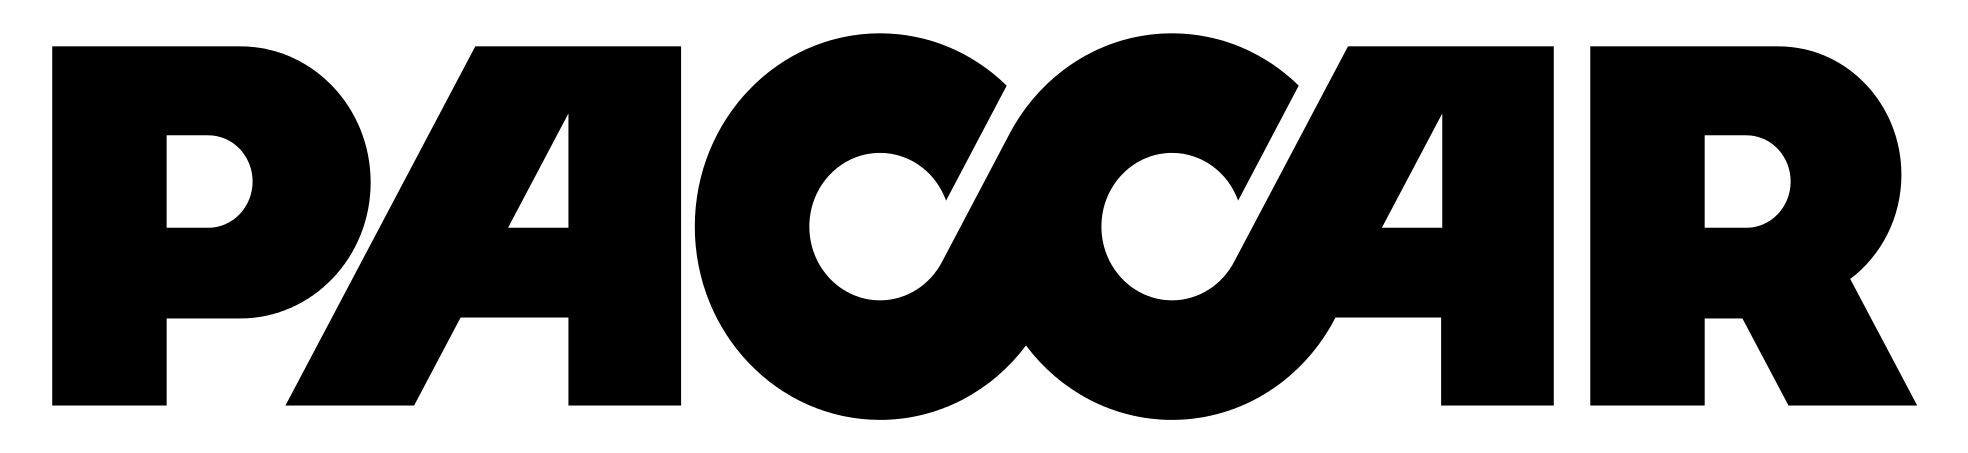 Paccar Logo PNG Image